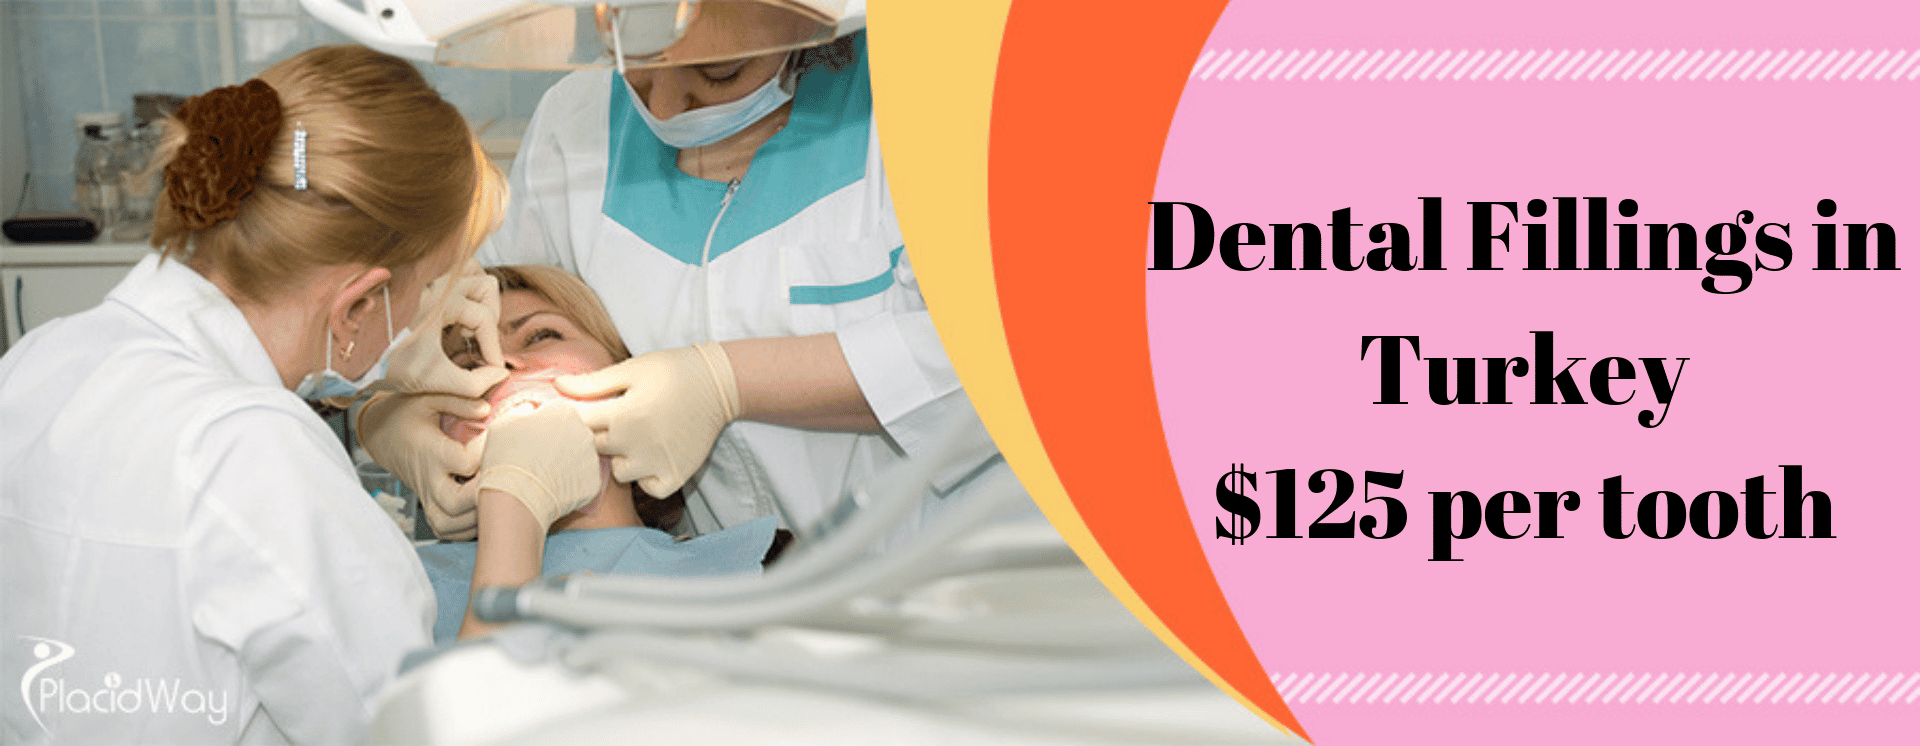 Dental Fillings Packages in Turkey Cost